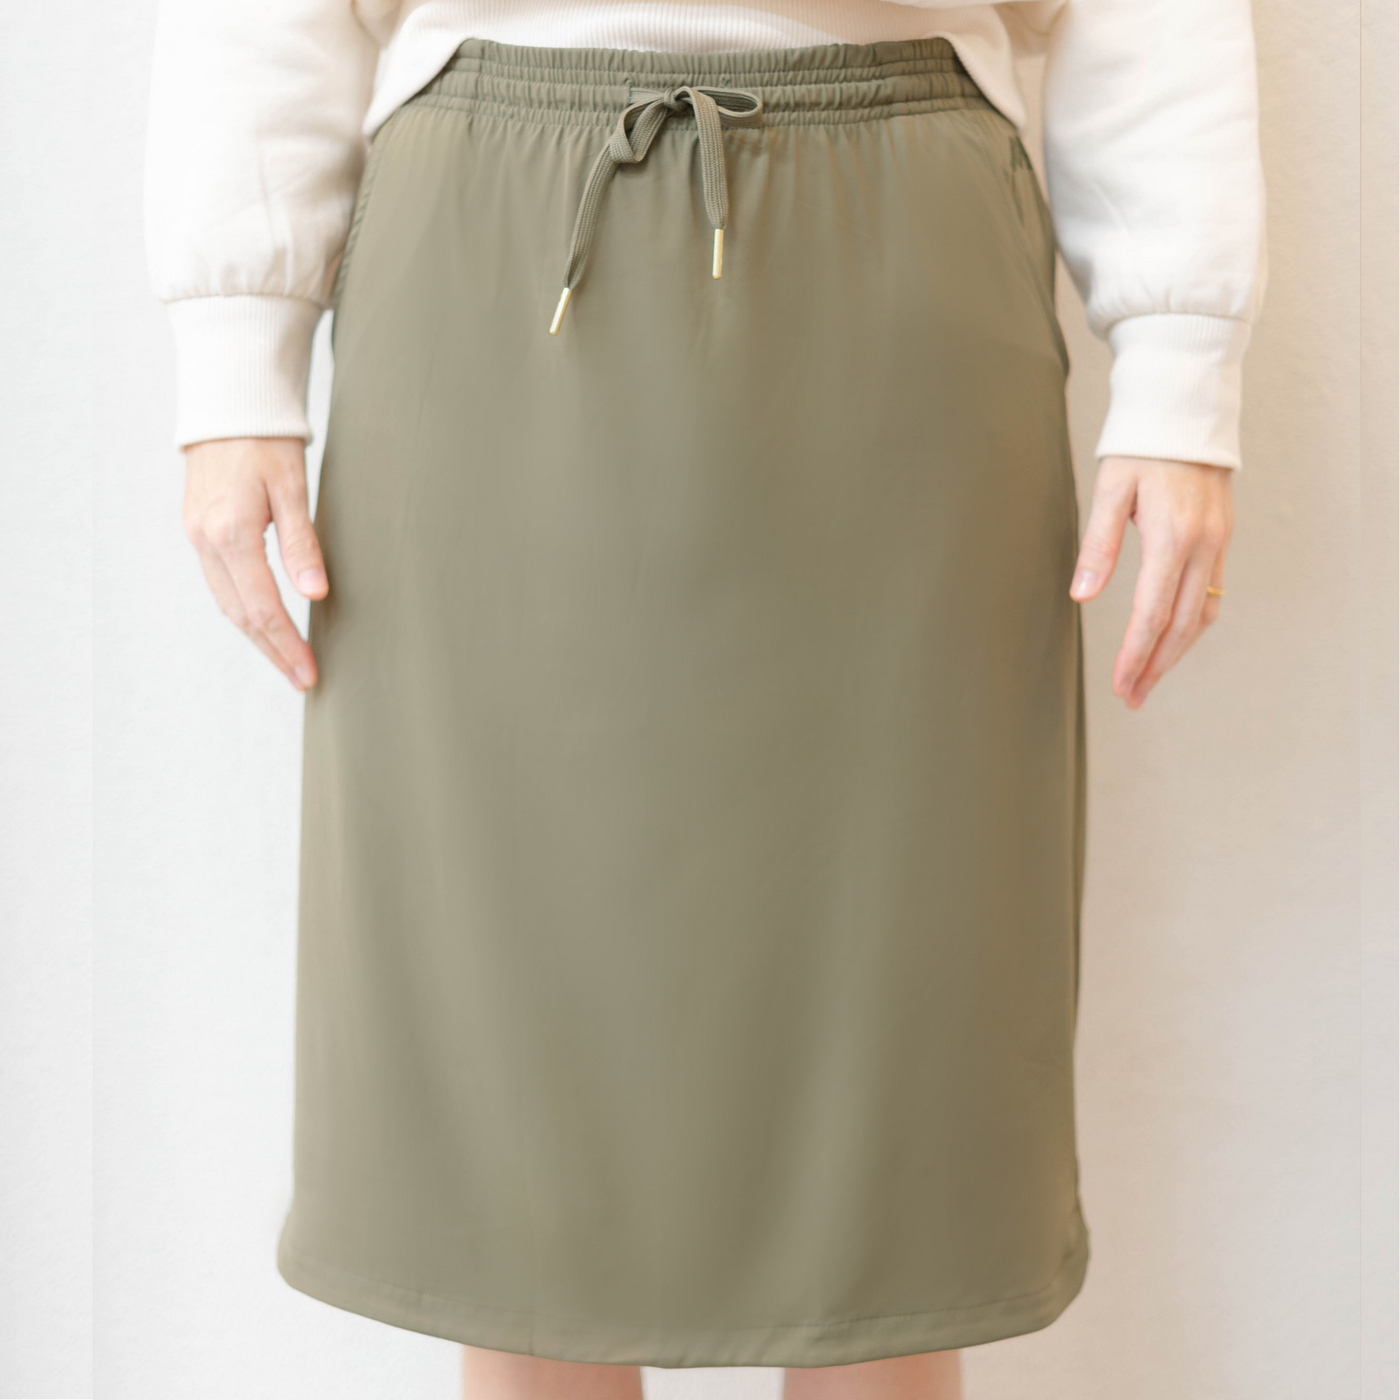 The EveryDay Skirt - Olive Green - MOD Sportswear